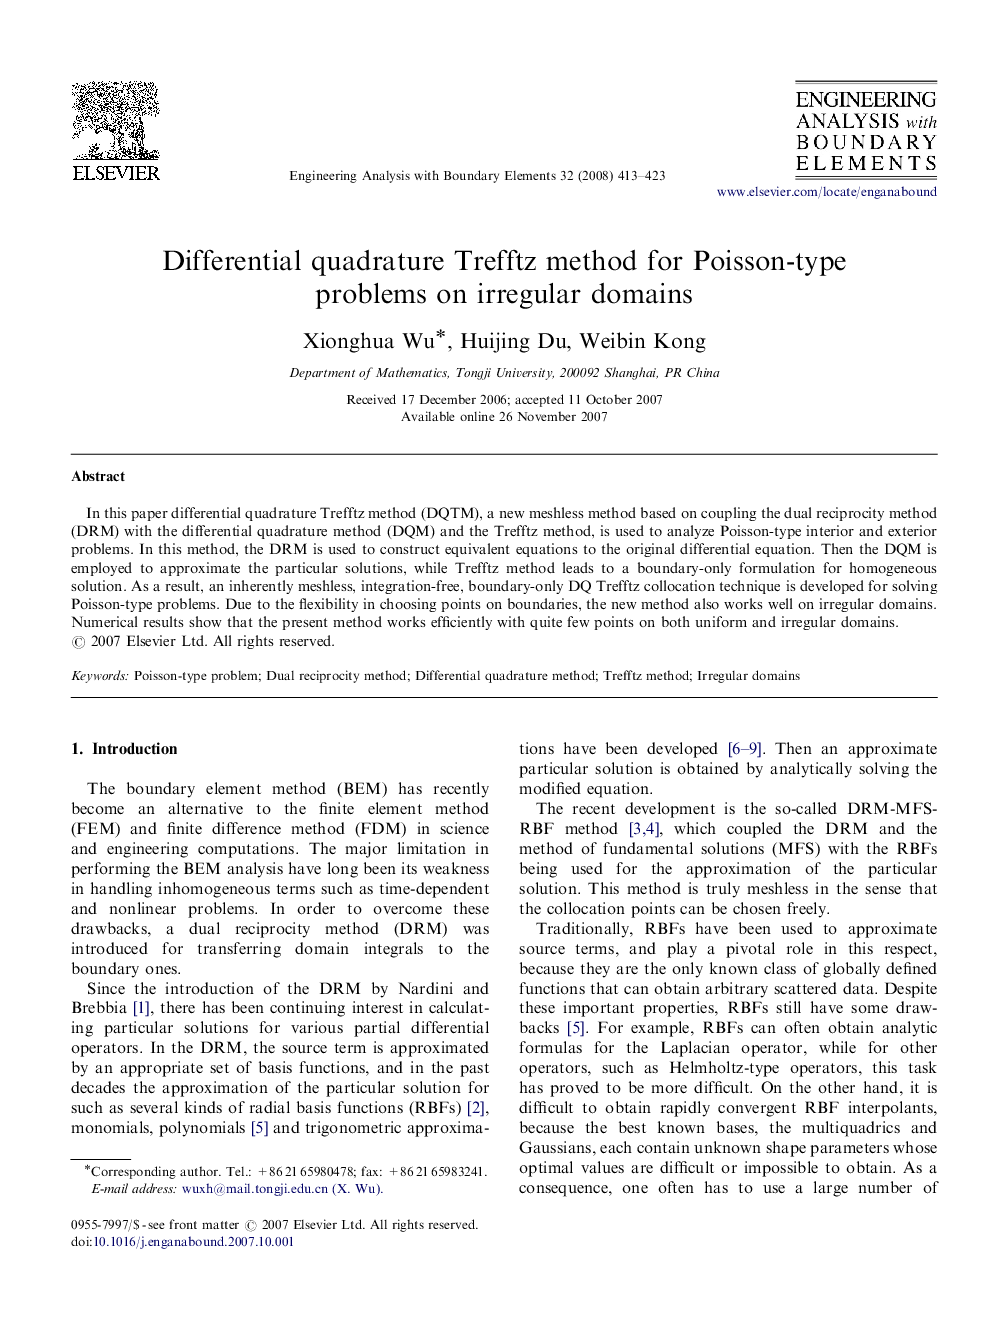 Differential quadrature Trefftz method for Poisson-type problems on irregular domains